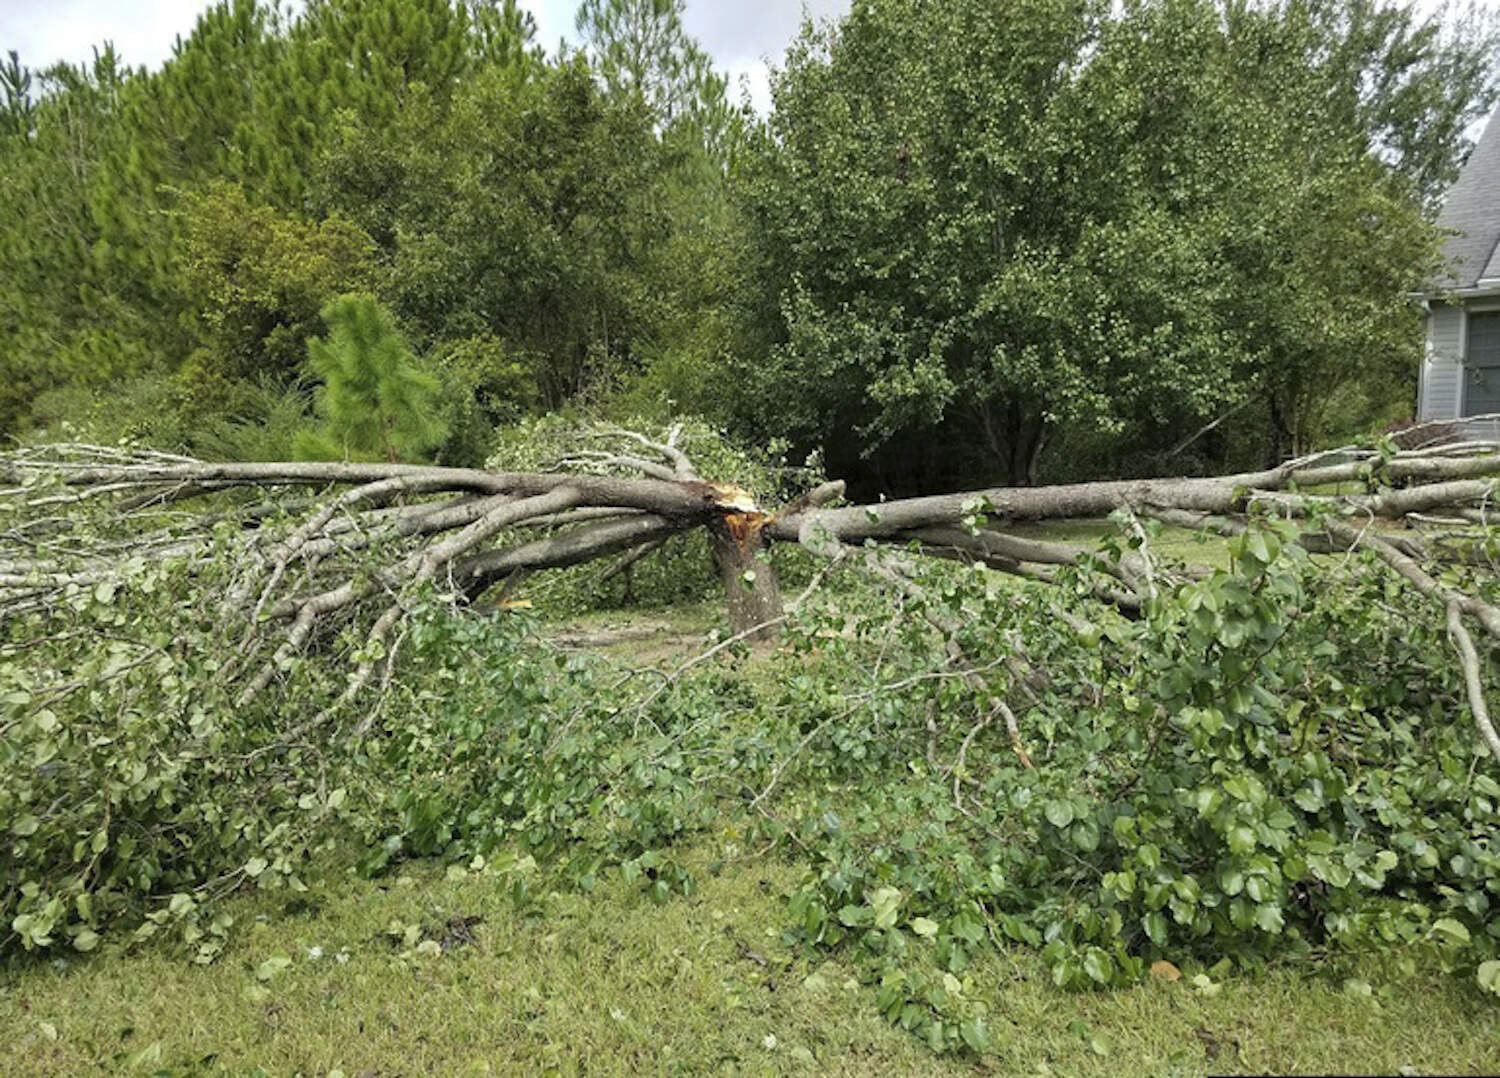 The Callery pear tree's weak branch union often results in splitting during storms. (Rebekah D. Wallace/ University of Georgia, Bugwood.org via AP)